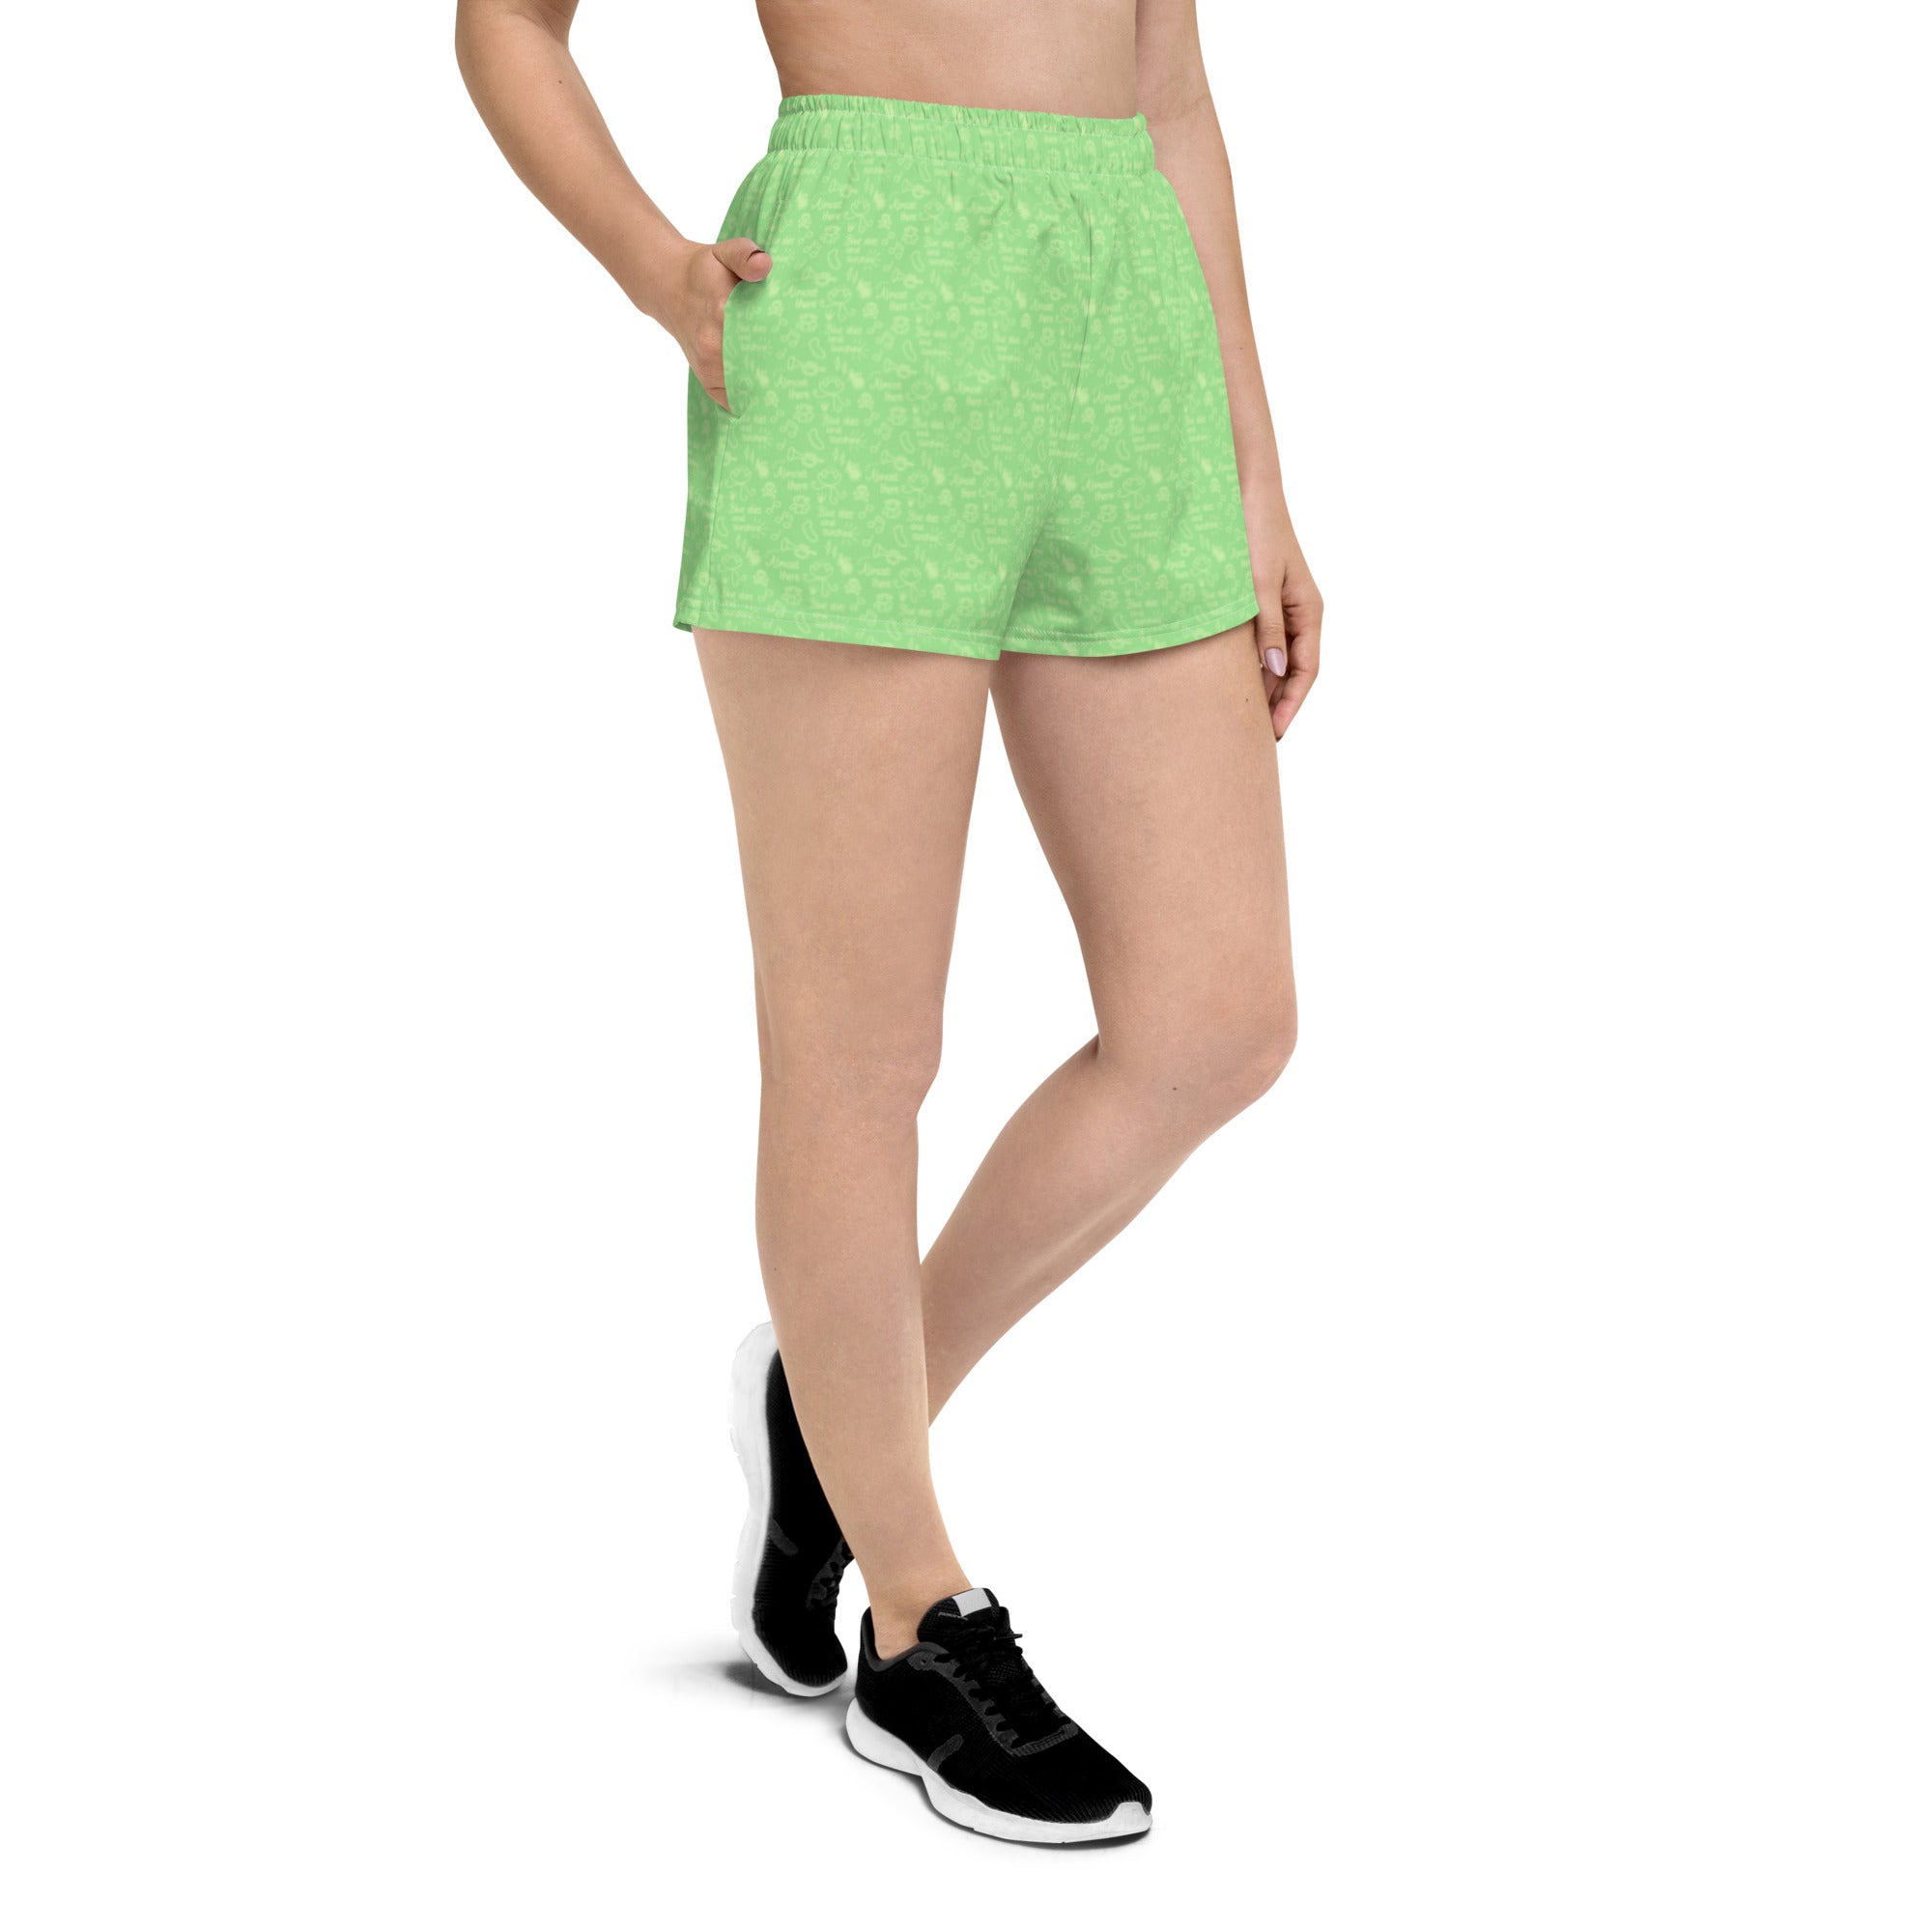 Tiana Women's Athletic Short Shorts